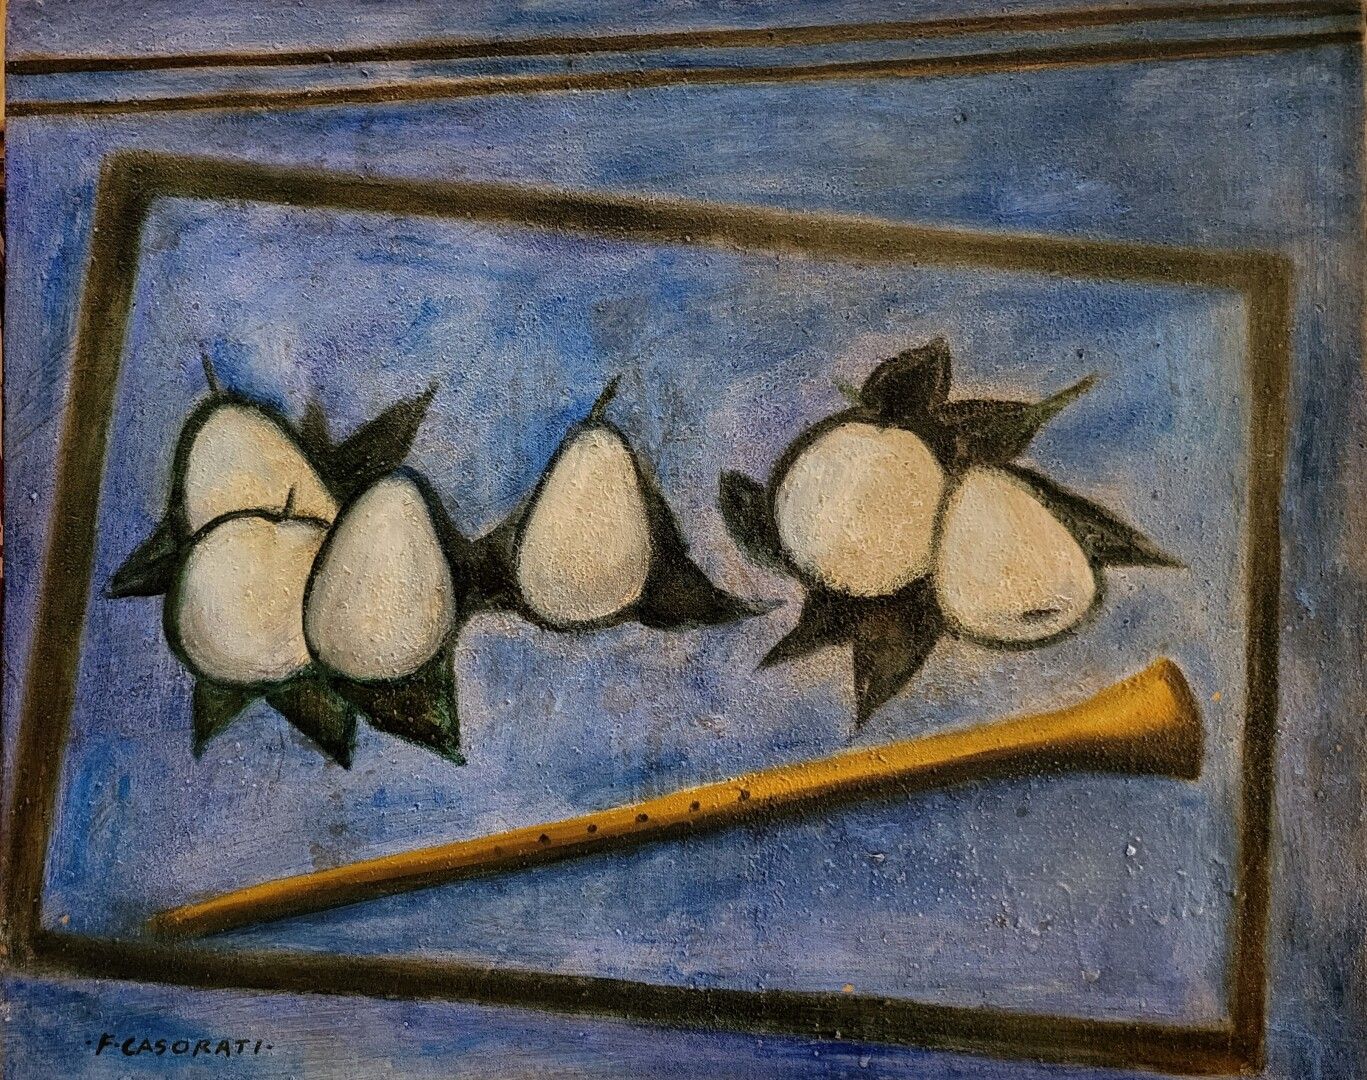 Null 弗朗西斯科-卡索拉蒂-帕瓦罗洛(1934-2013)

梨子和长笛的静物画

布面油画，左下角有签名

51 x 62 cm

出处：展览GALERI&hellip;